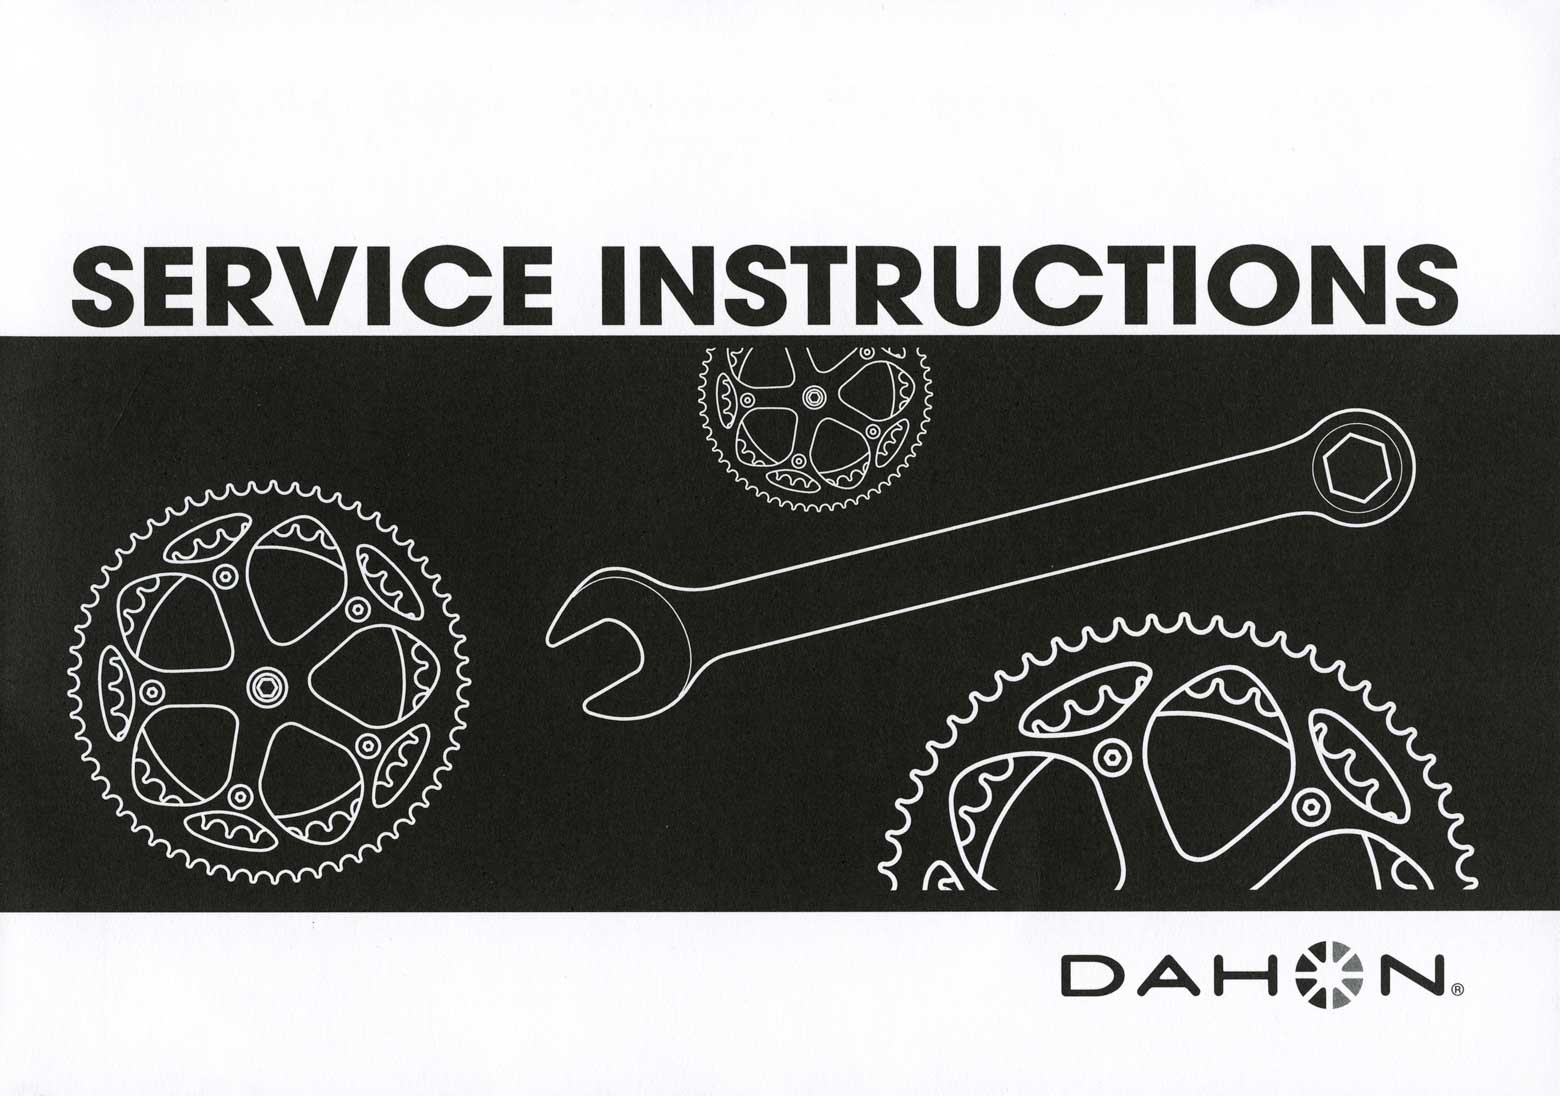 Dahon - Service Instructions 2009 page 01 main image